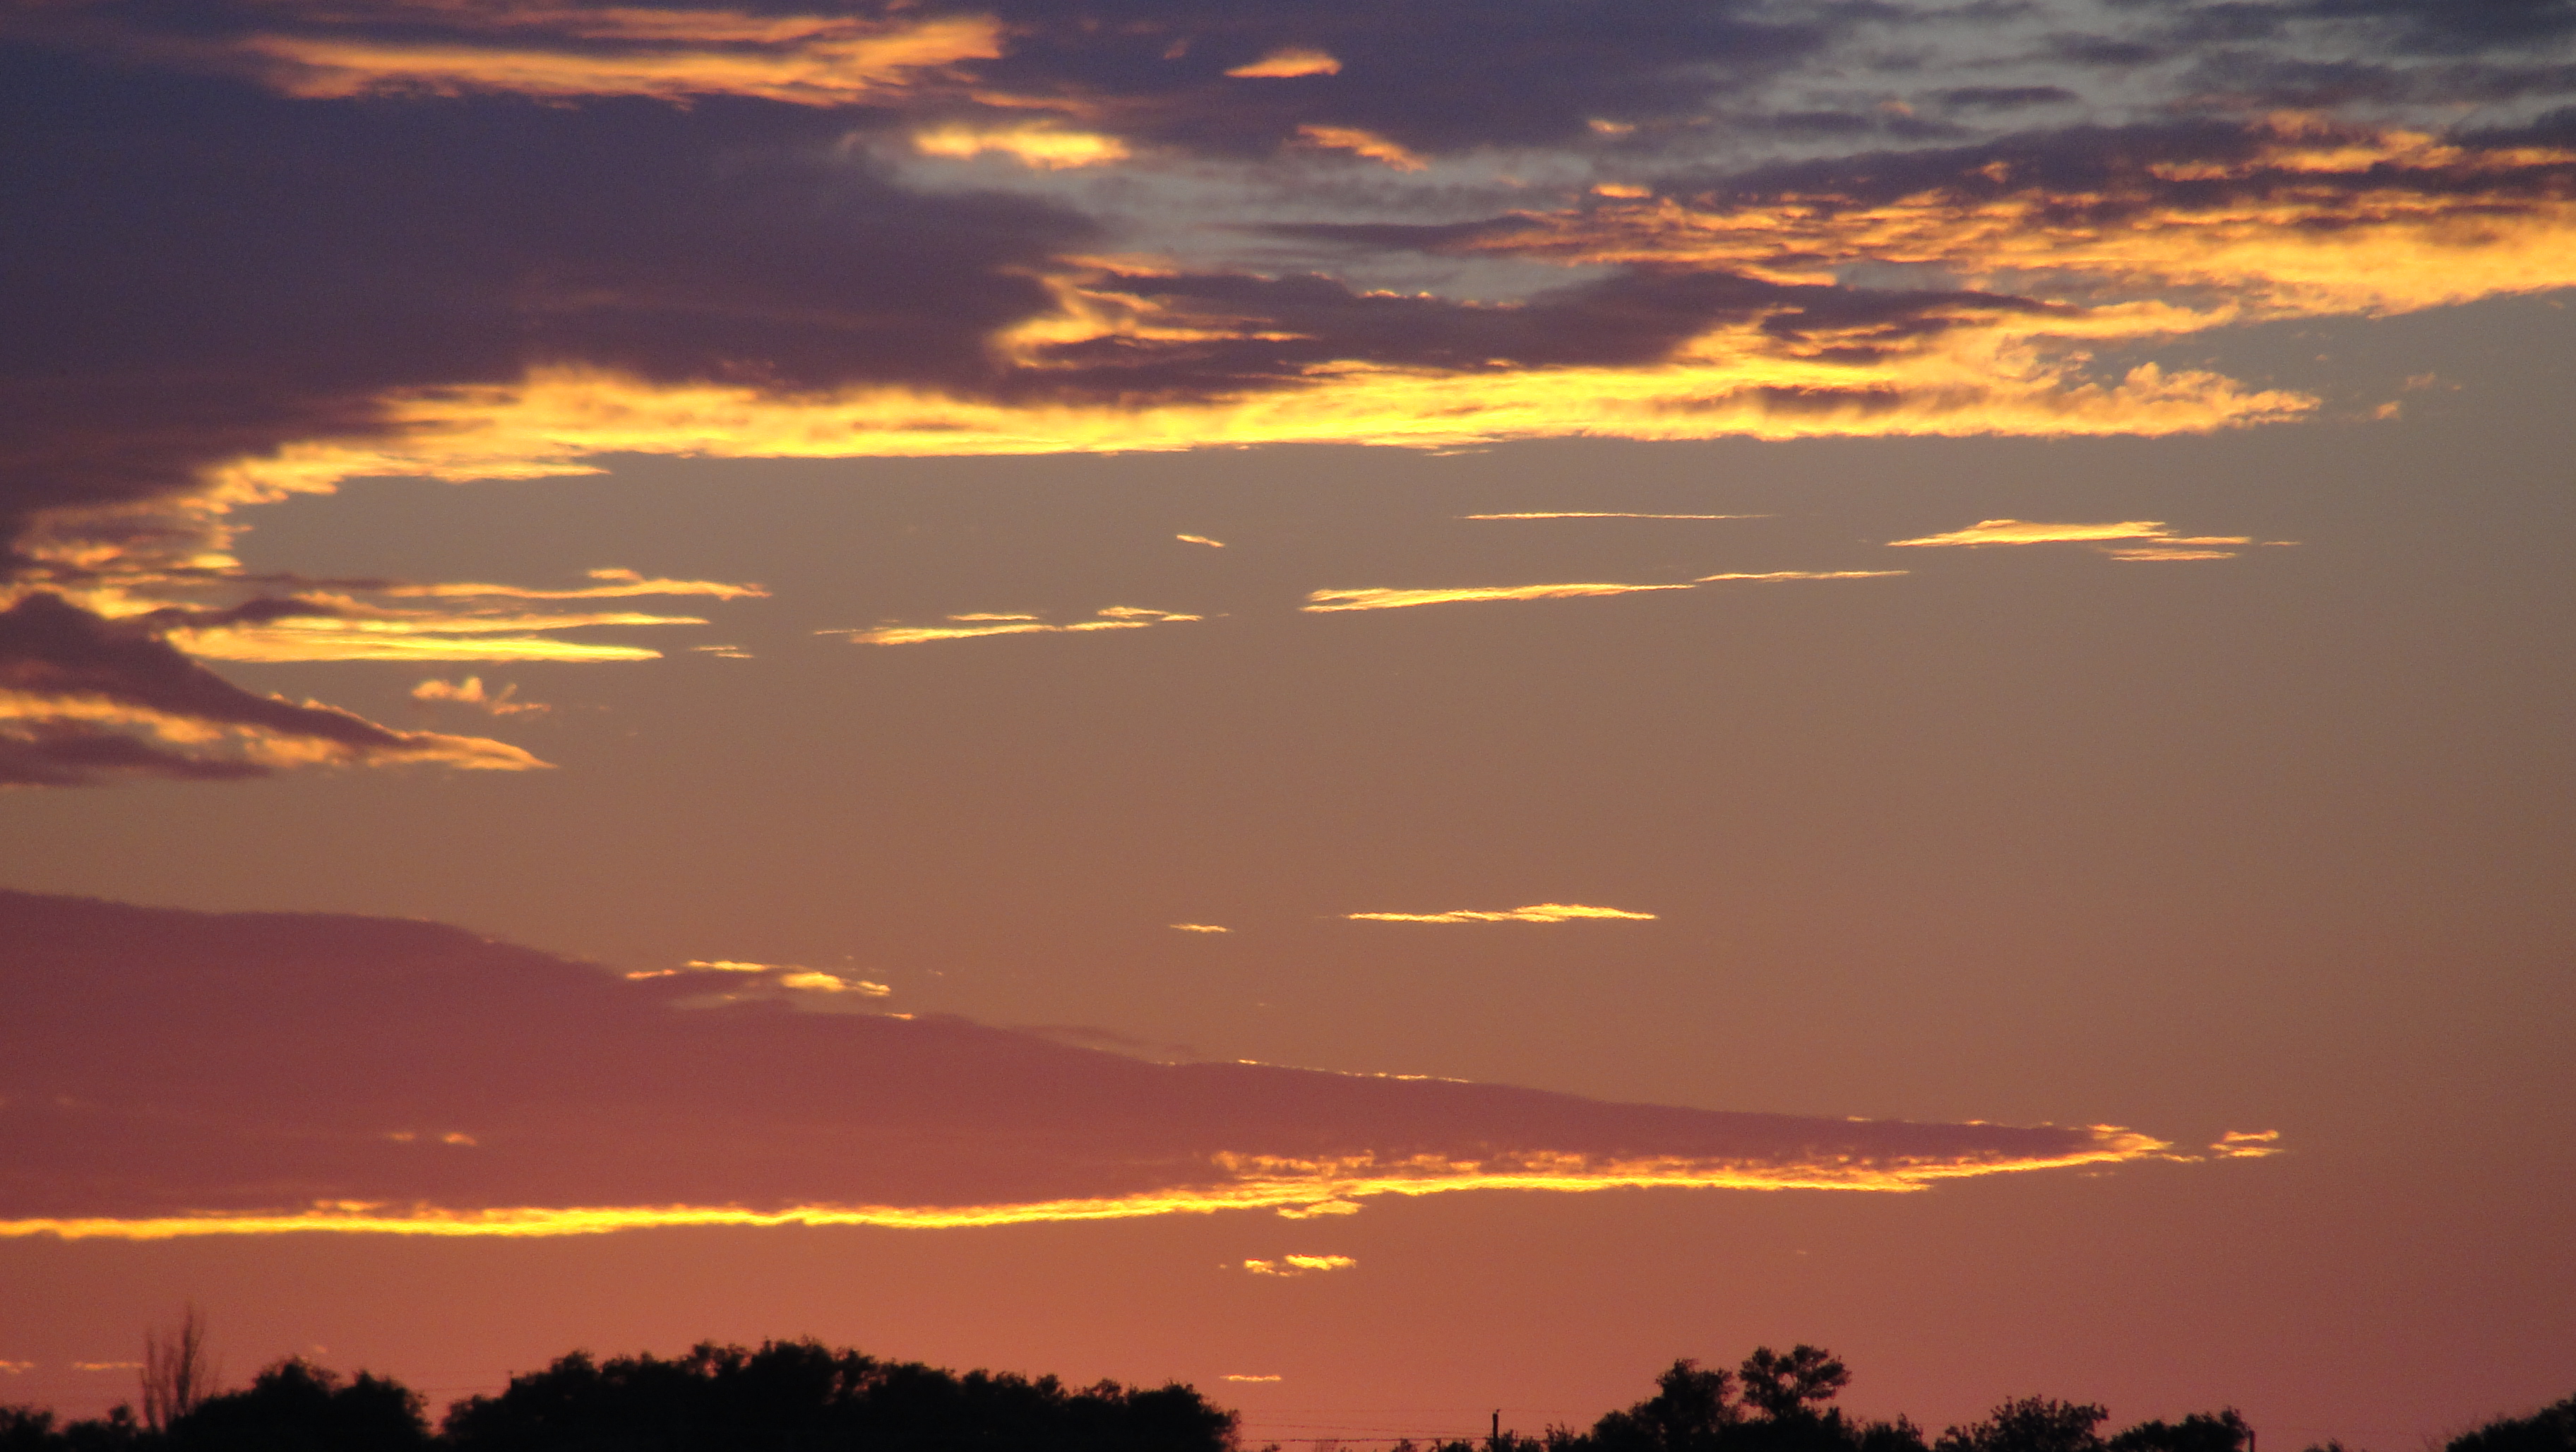 Sunset over Clovis, NM Summer 2010